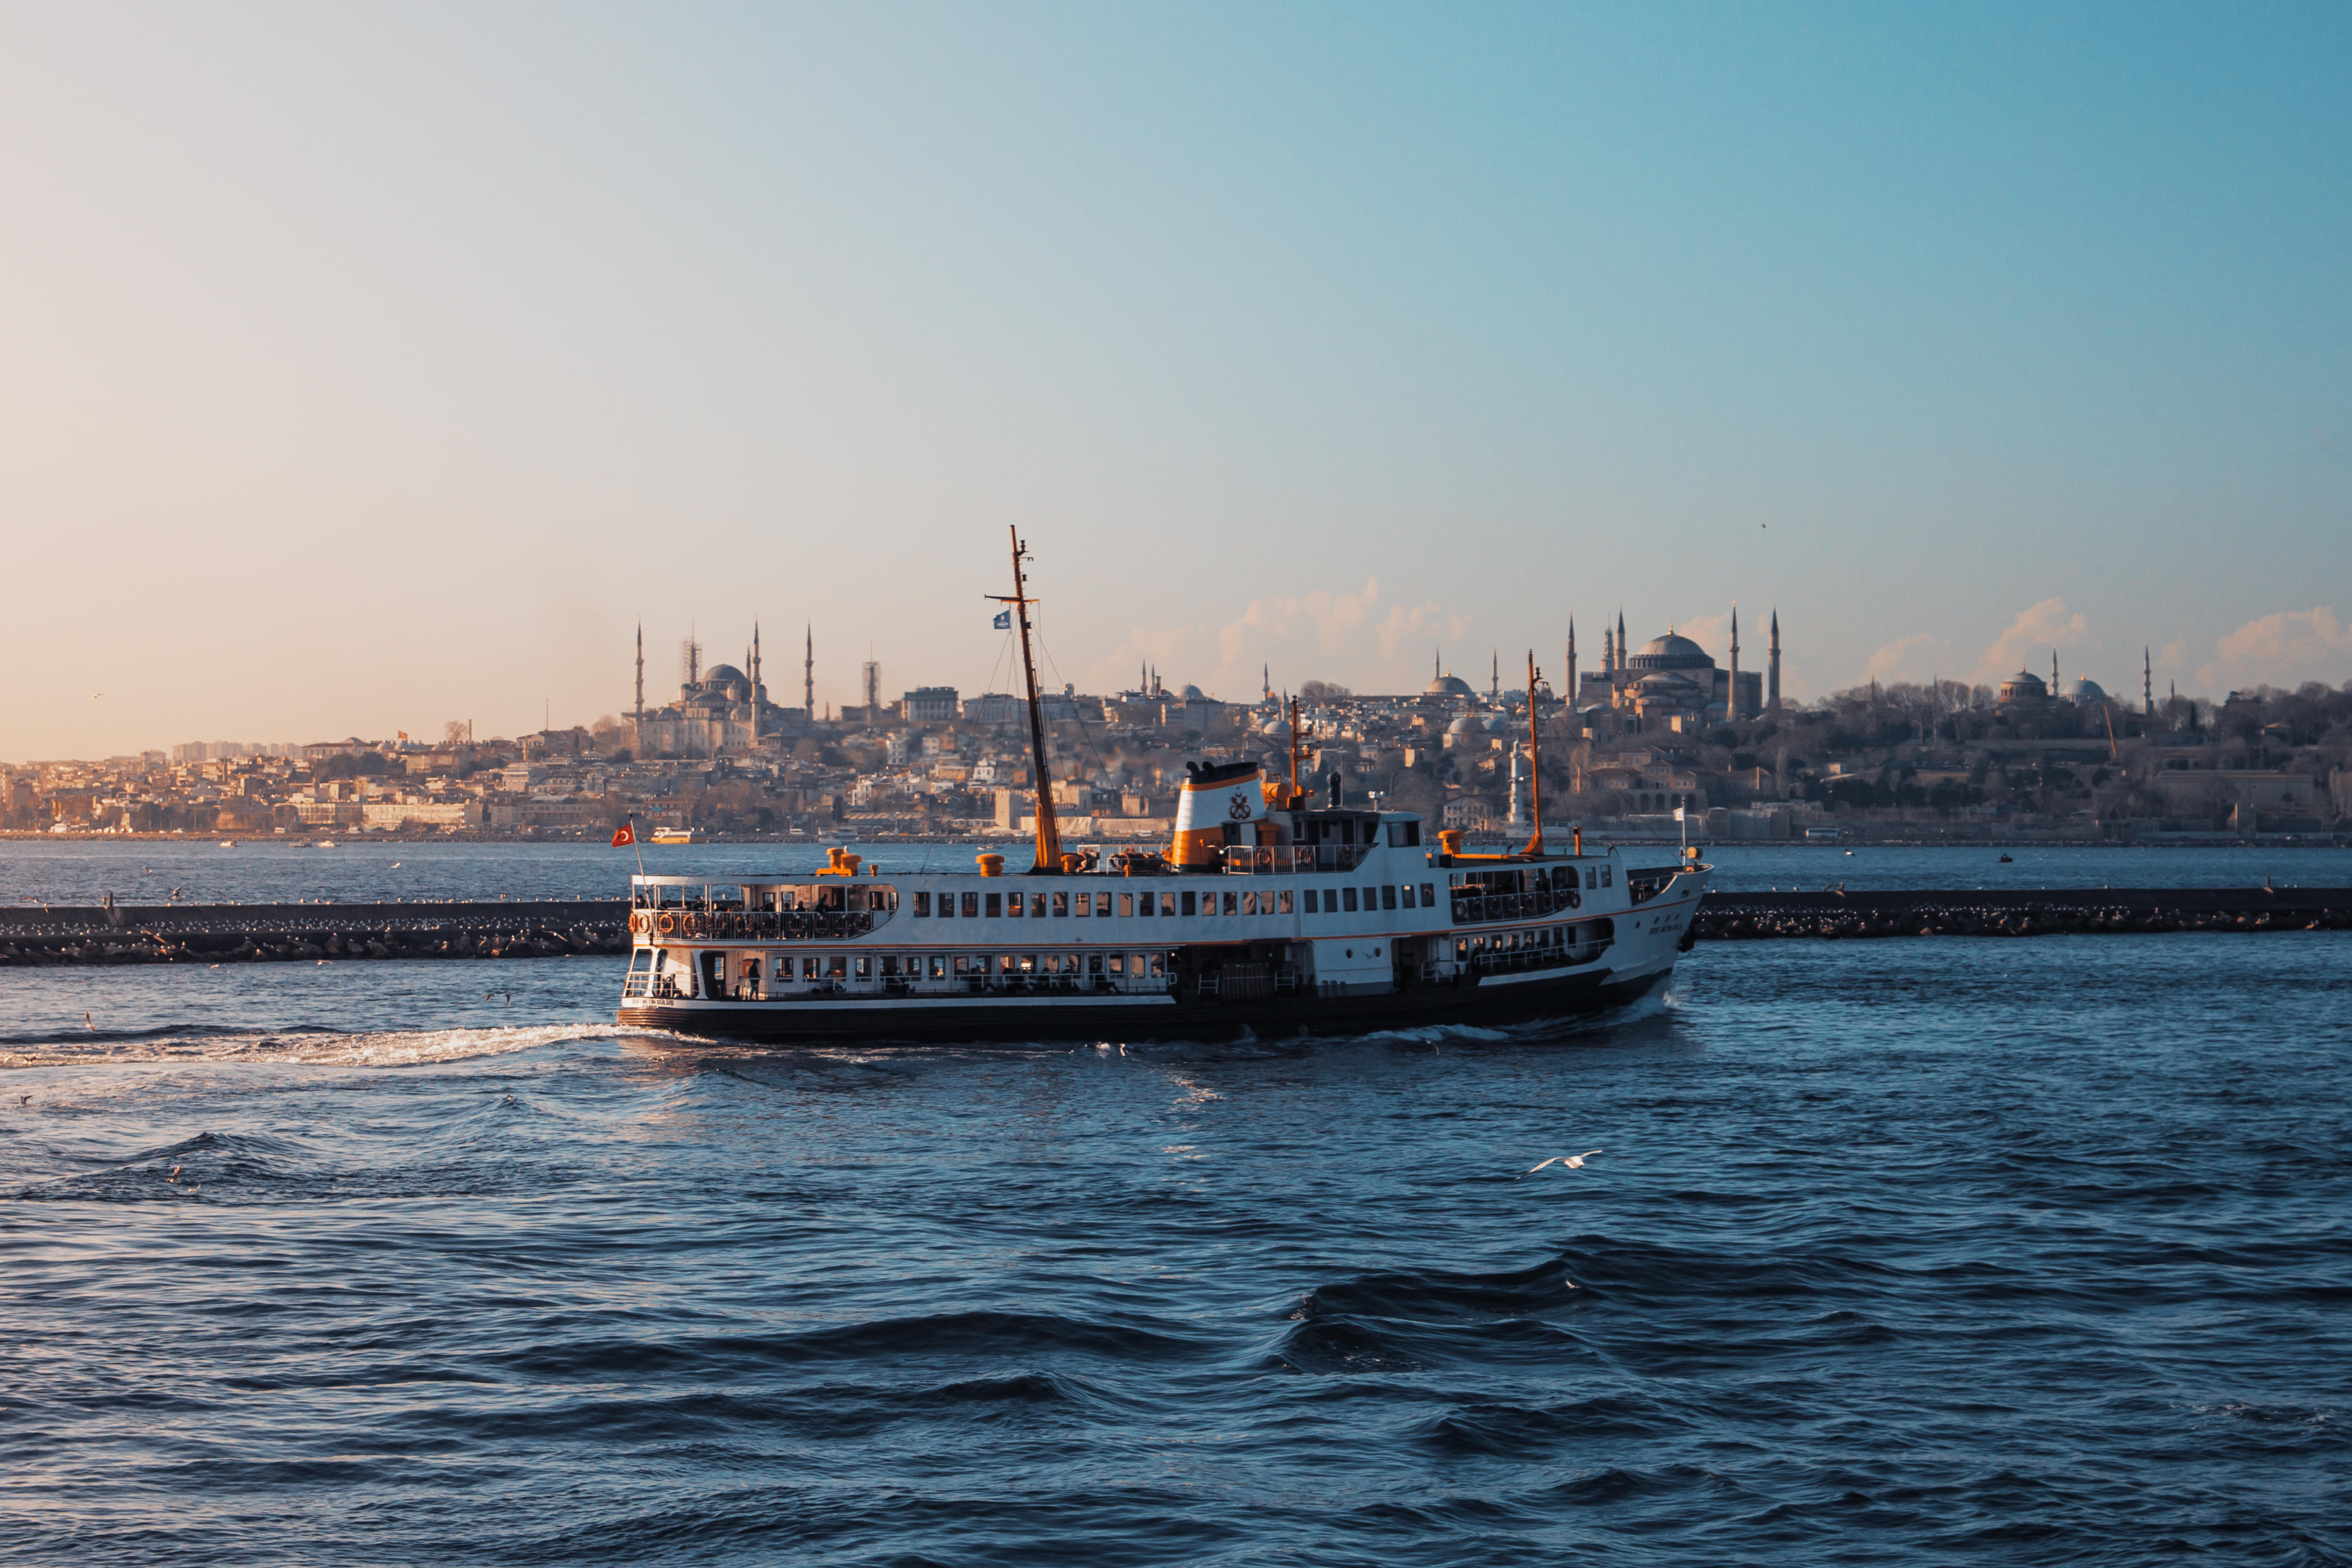 Bosphorus Strait and Black Sea Day Cruise